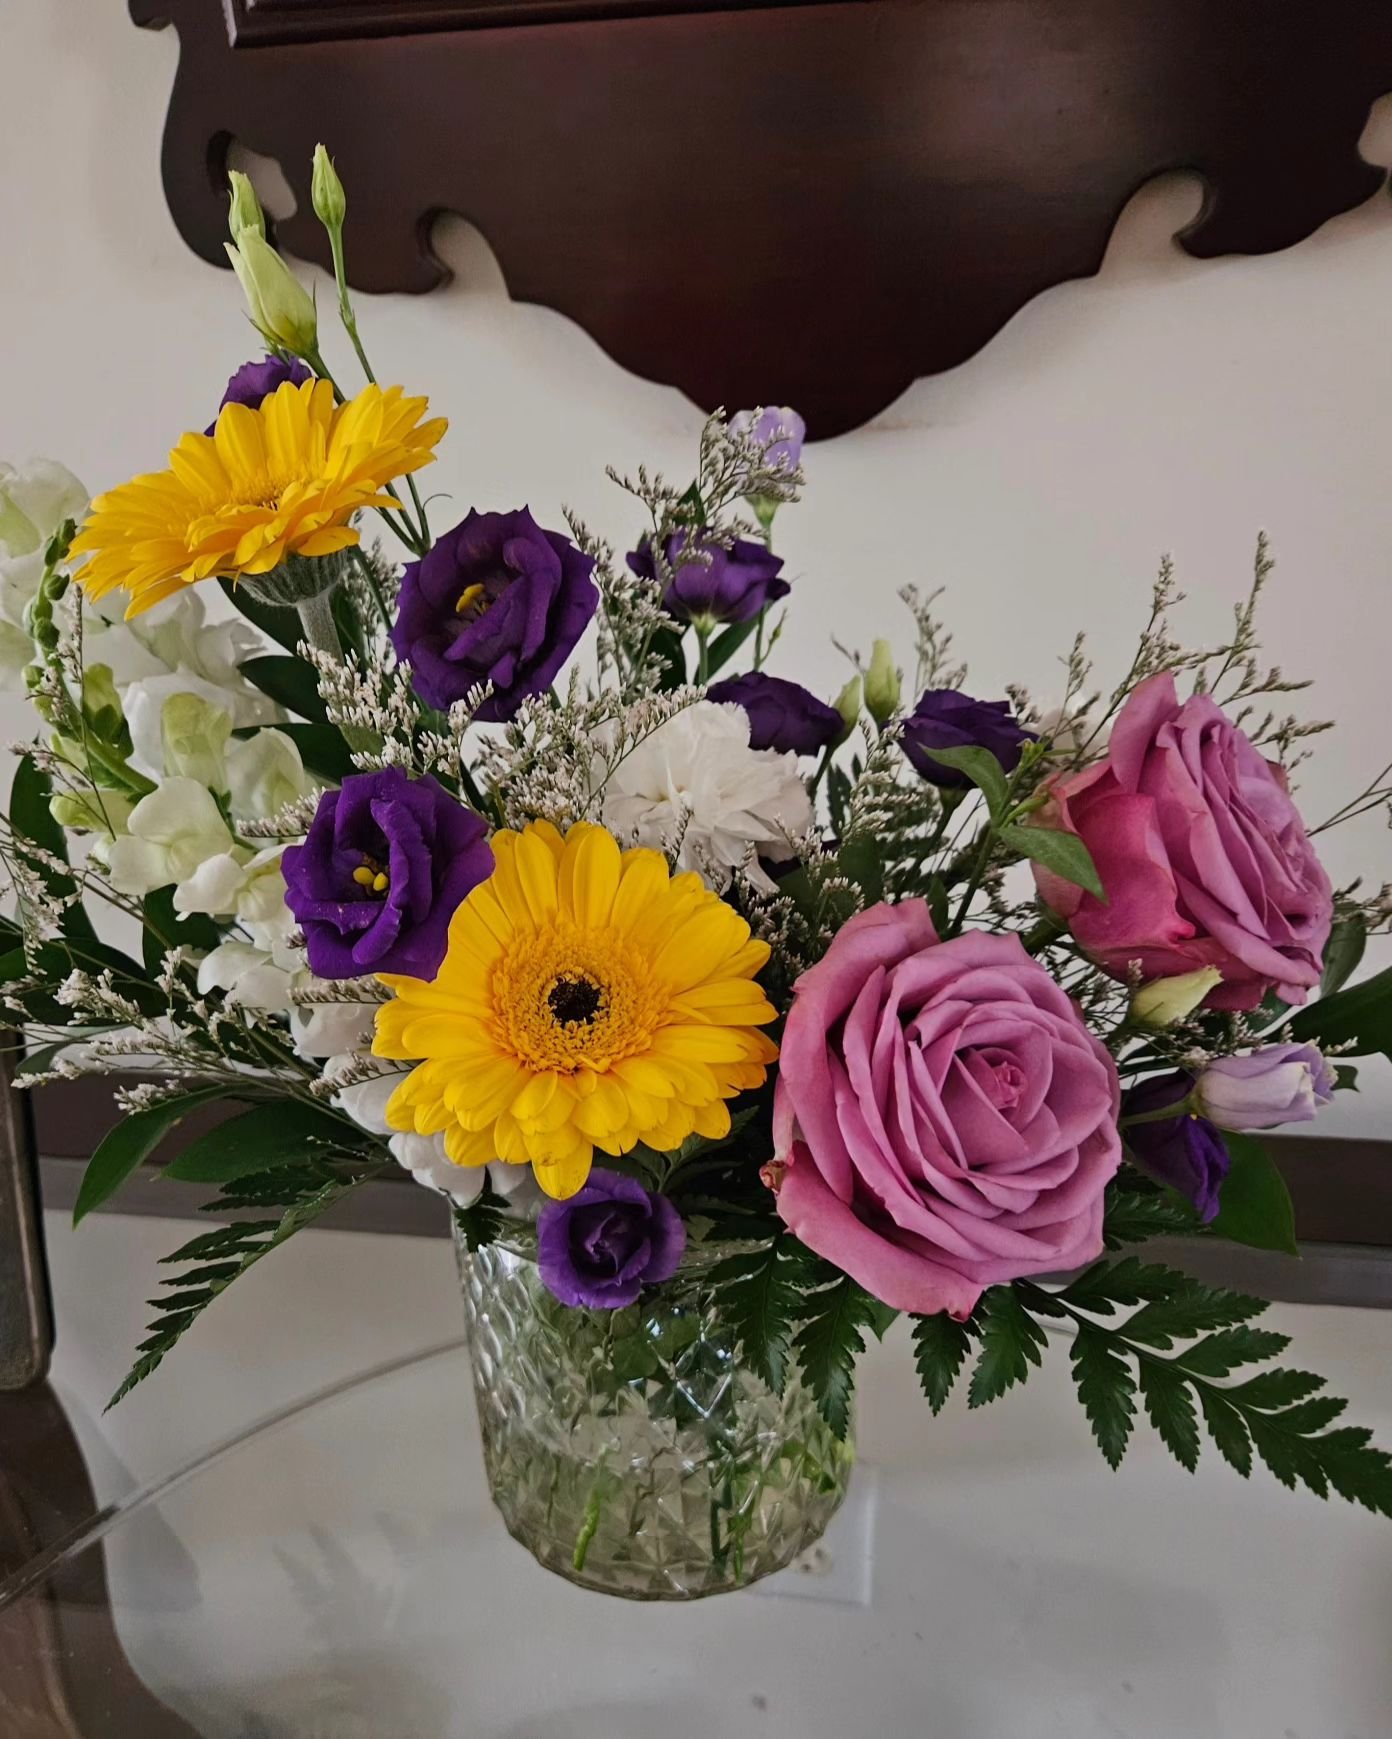 Flower Play: vase arrangement with @bears_blooms 

Gerbera Daisy
Lisianthus
Carnation
Snapdragon
Rose